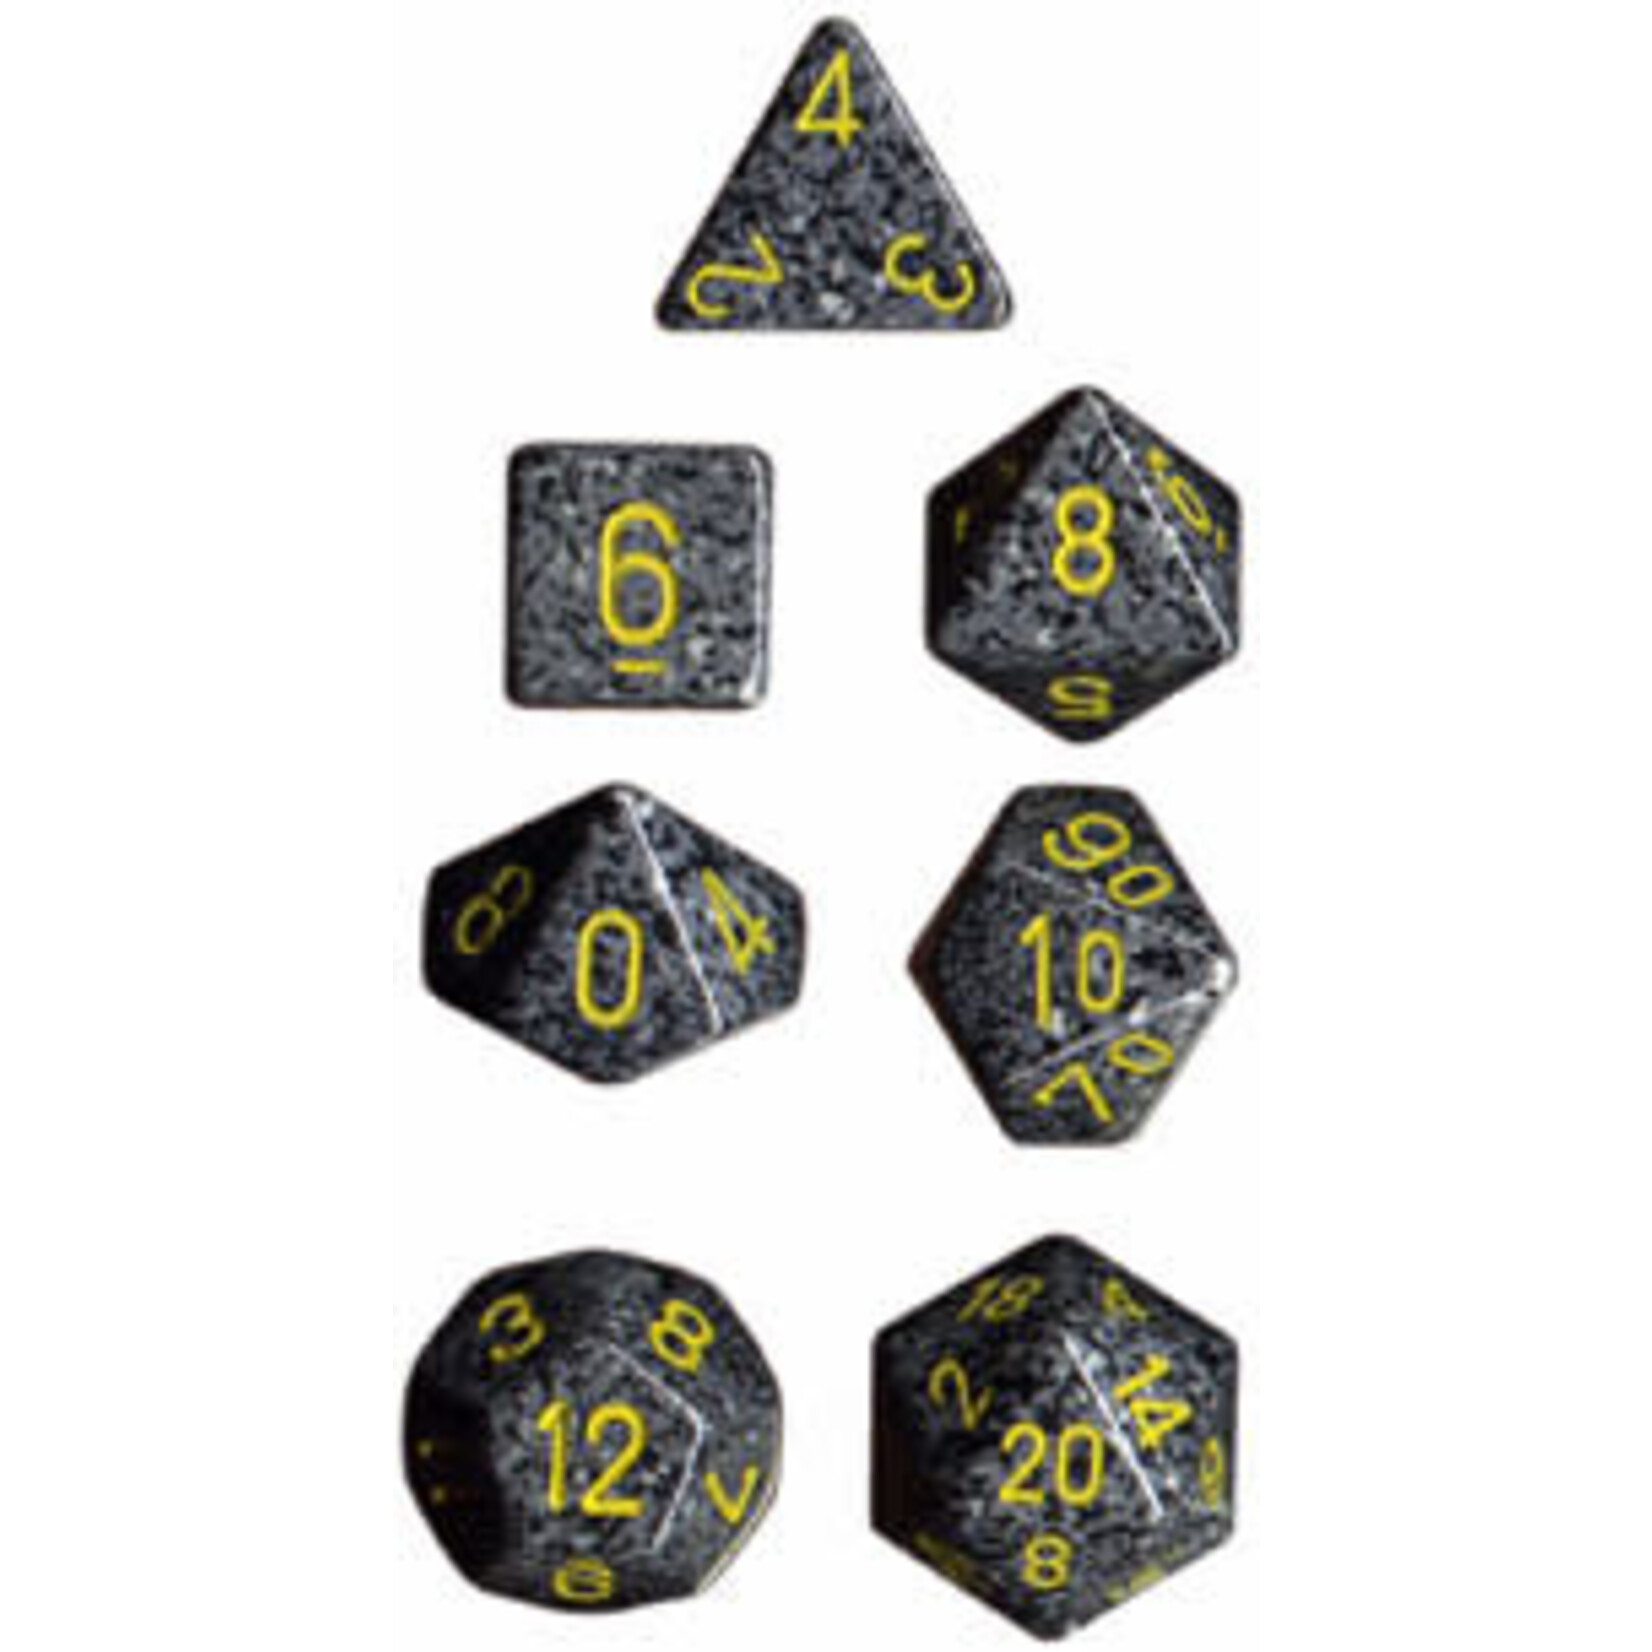 Chessex Speckled Urban Camo Polyhedral 7-Die Set